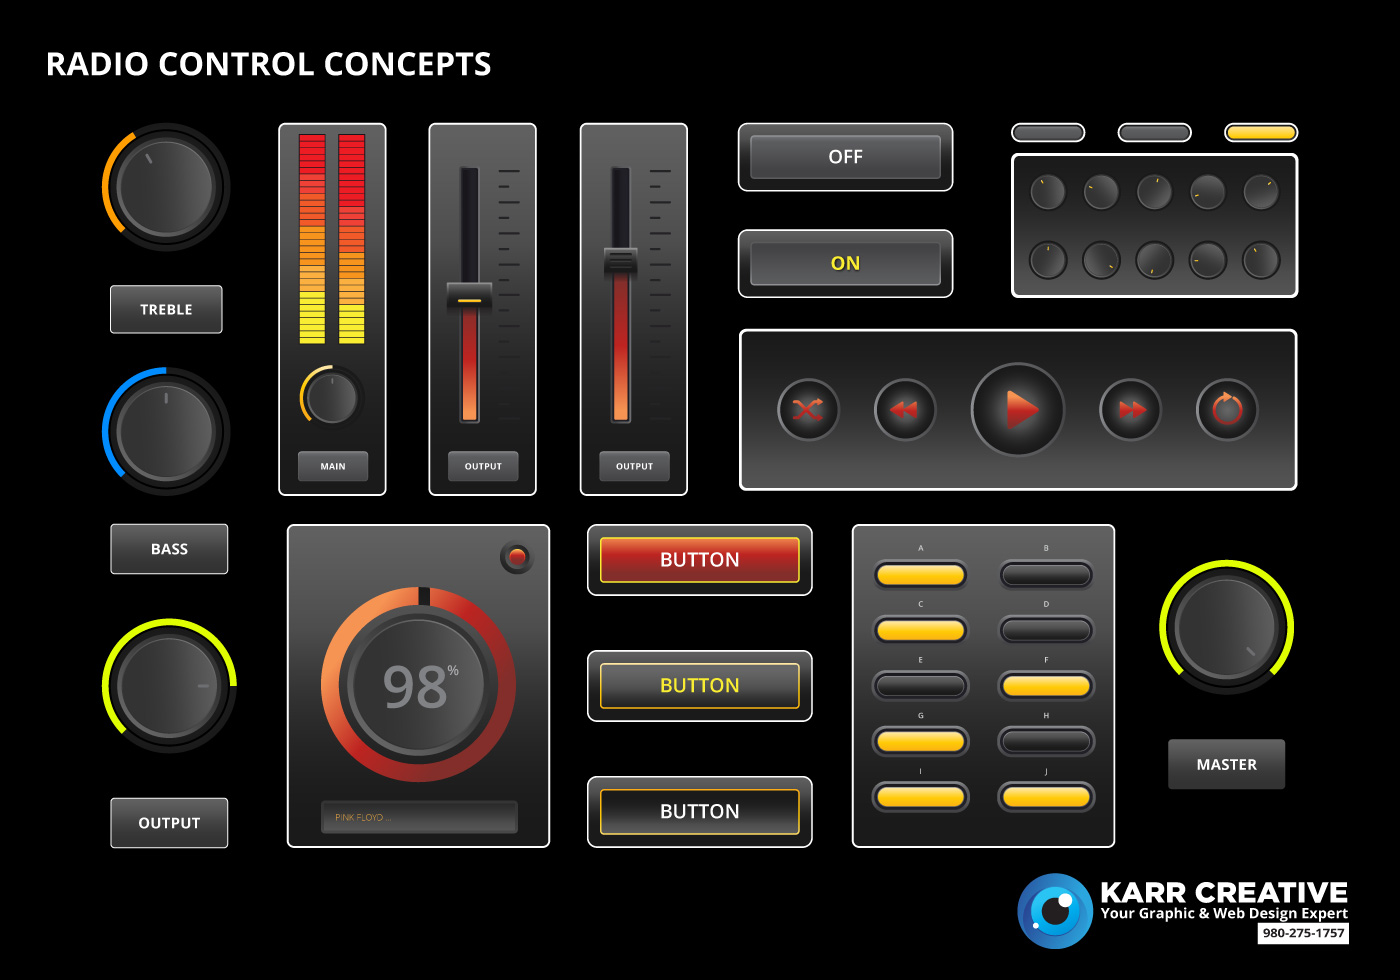 Radio-Control-Concepts-Karr-Creative